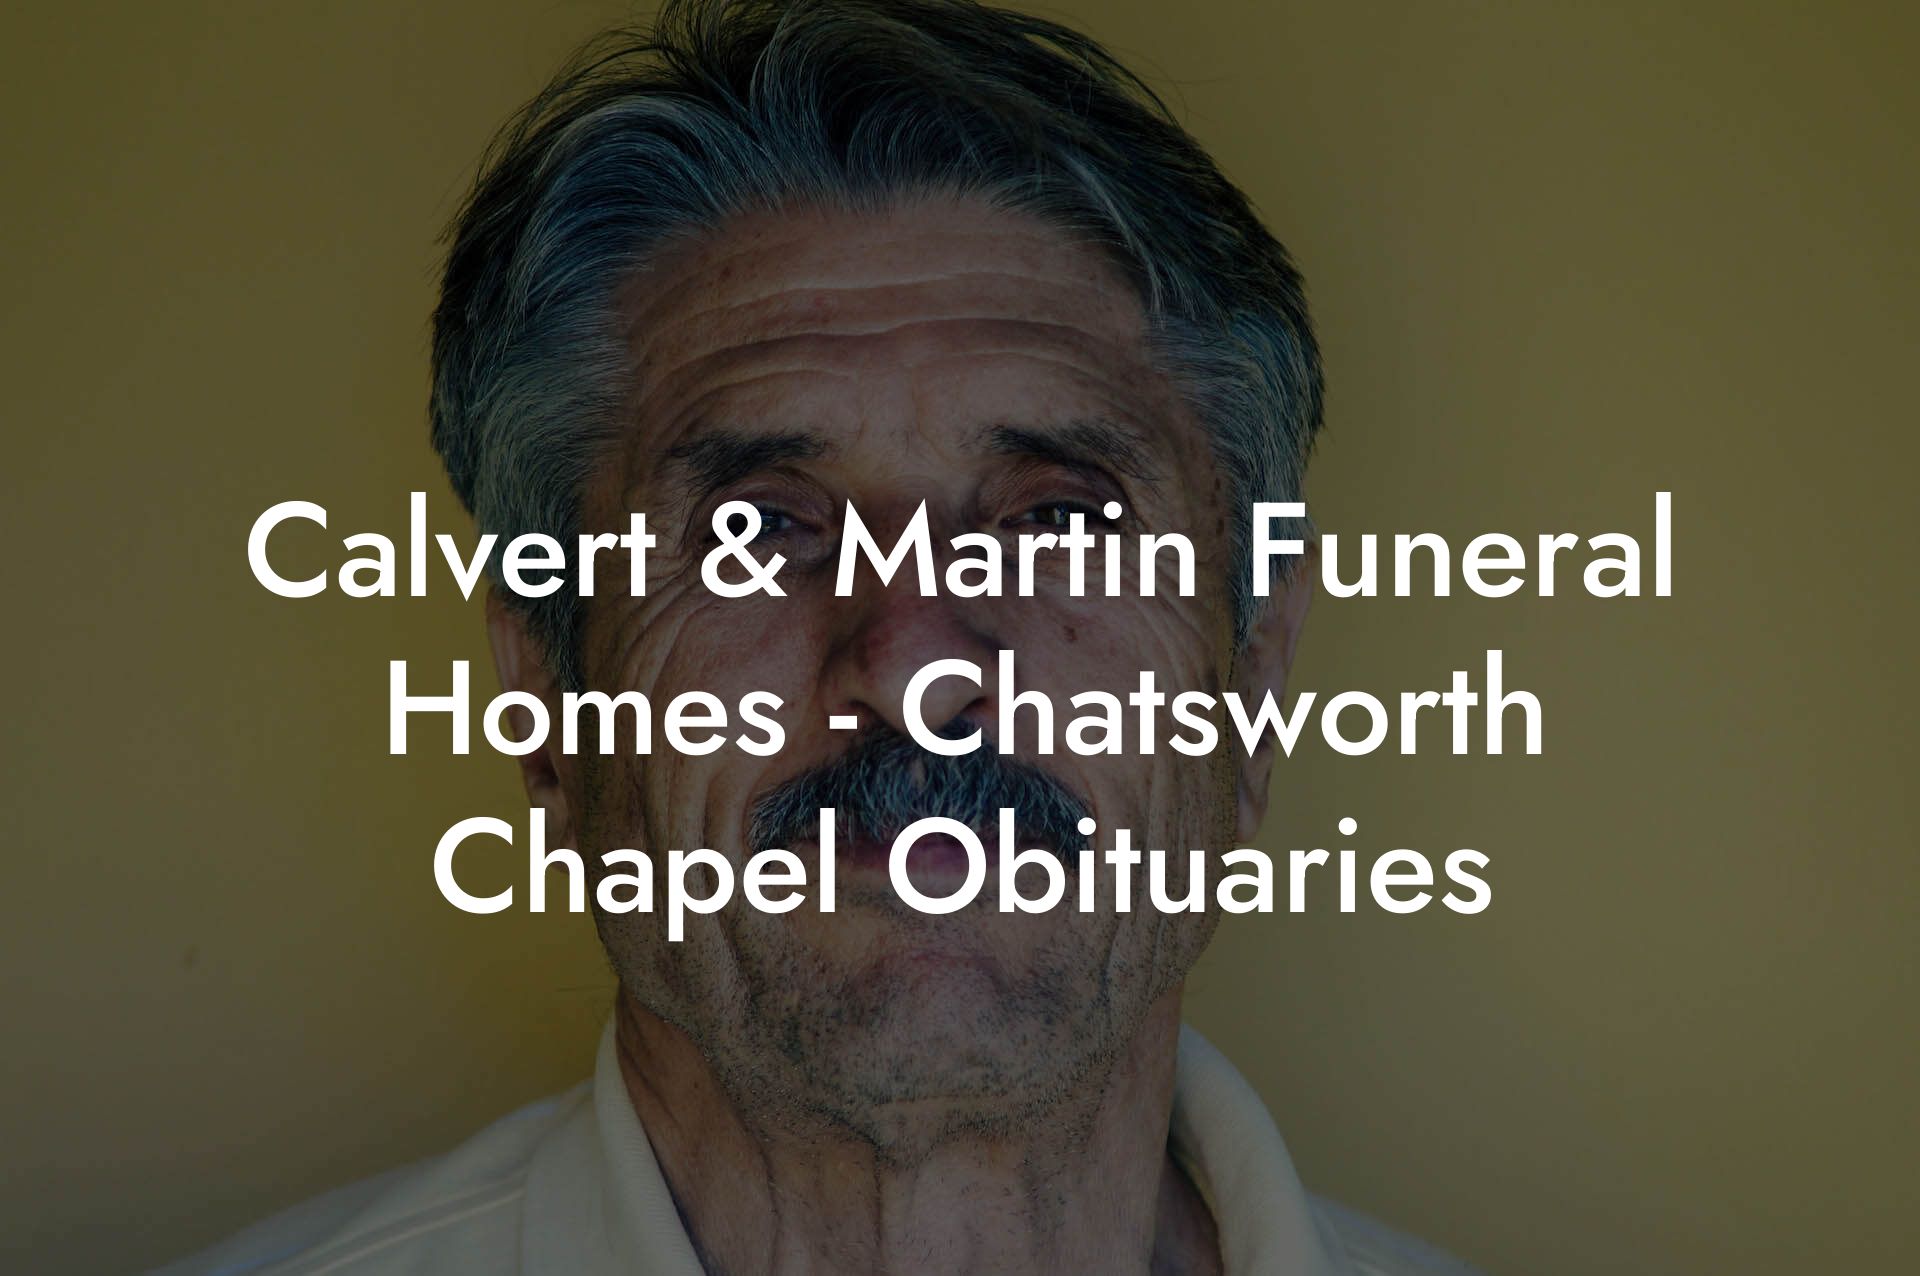 Calvert & Martin Funeral Homes - Chatsworth Chapel Obituaries